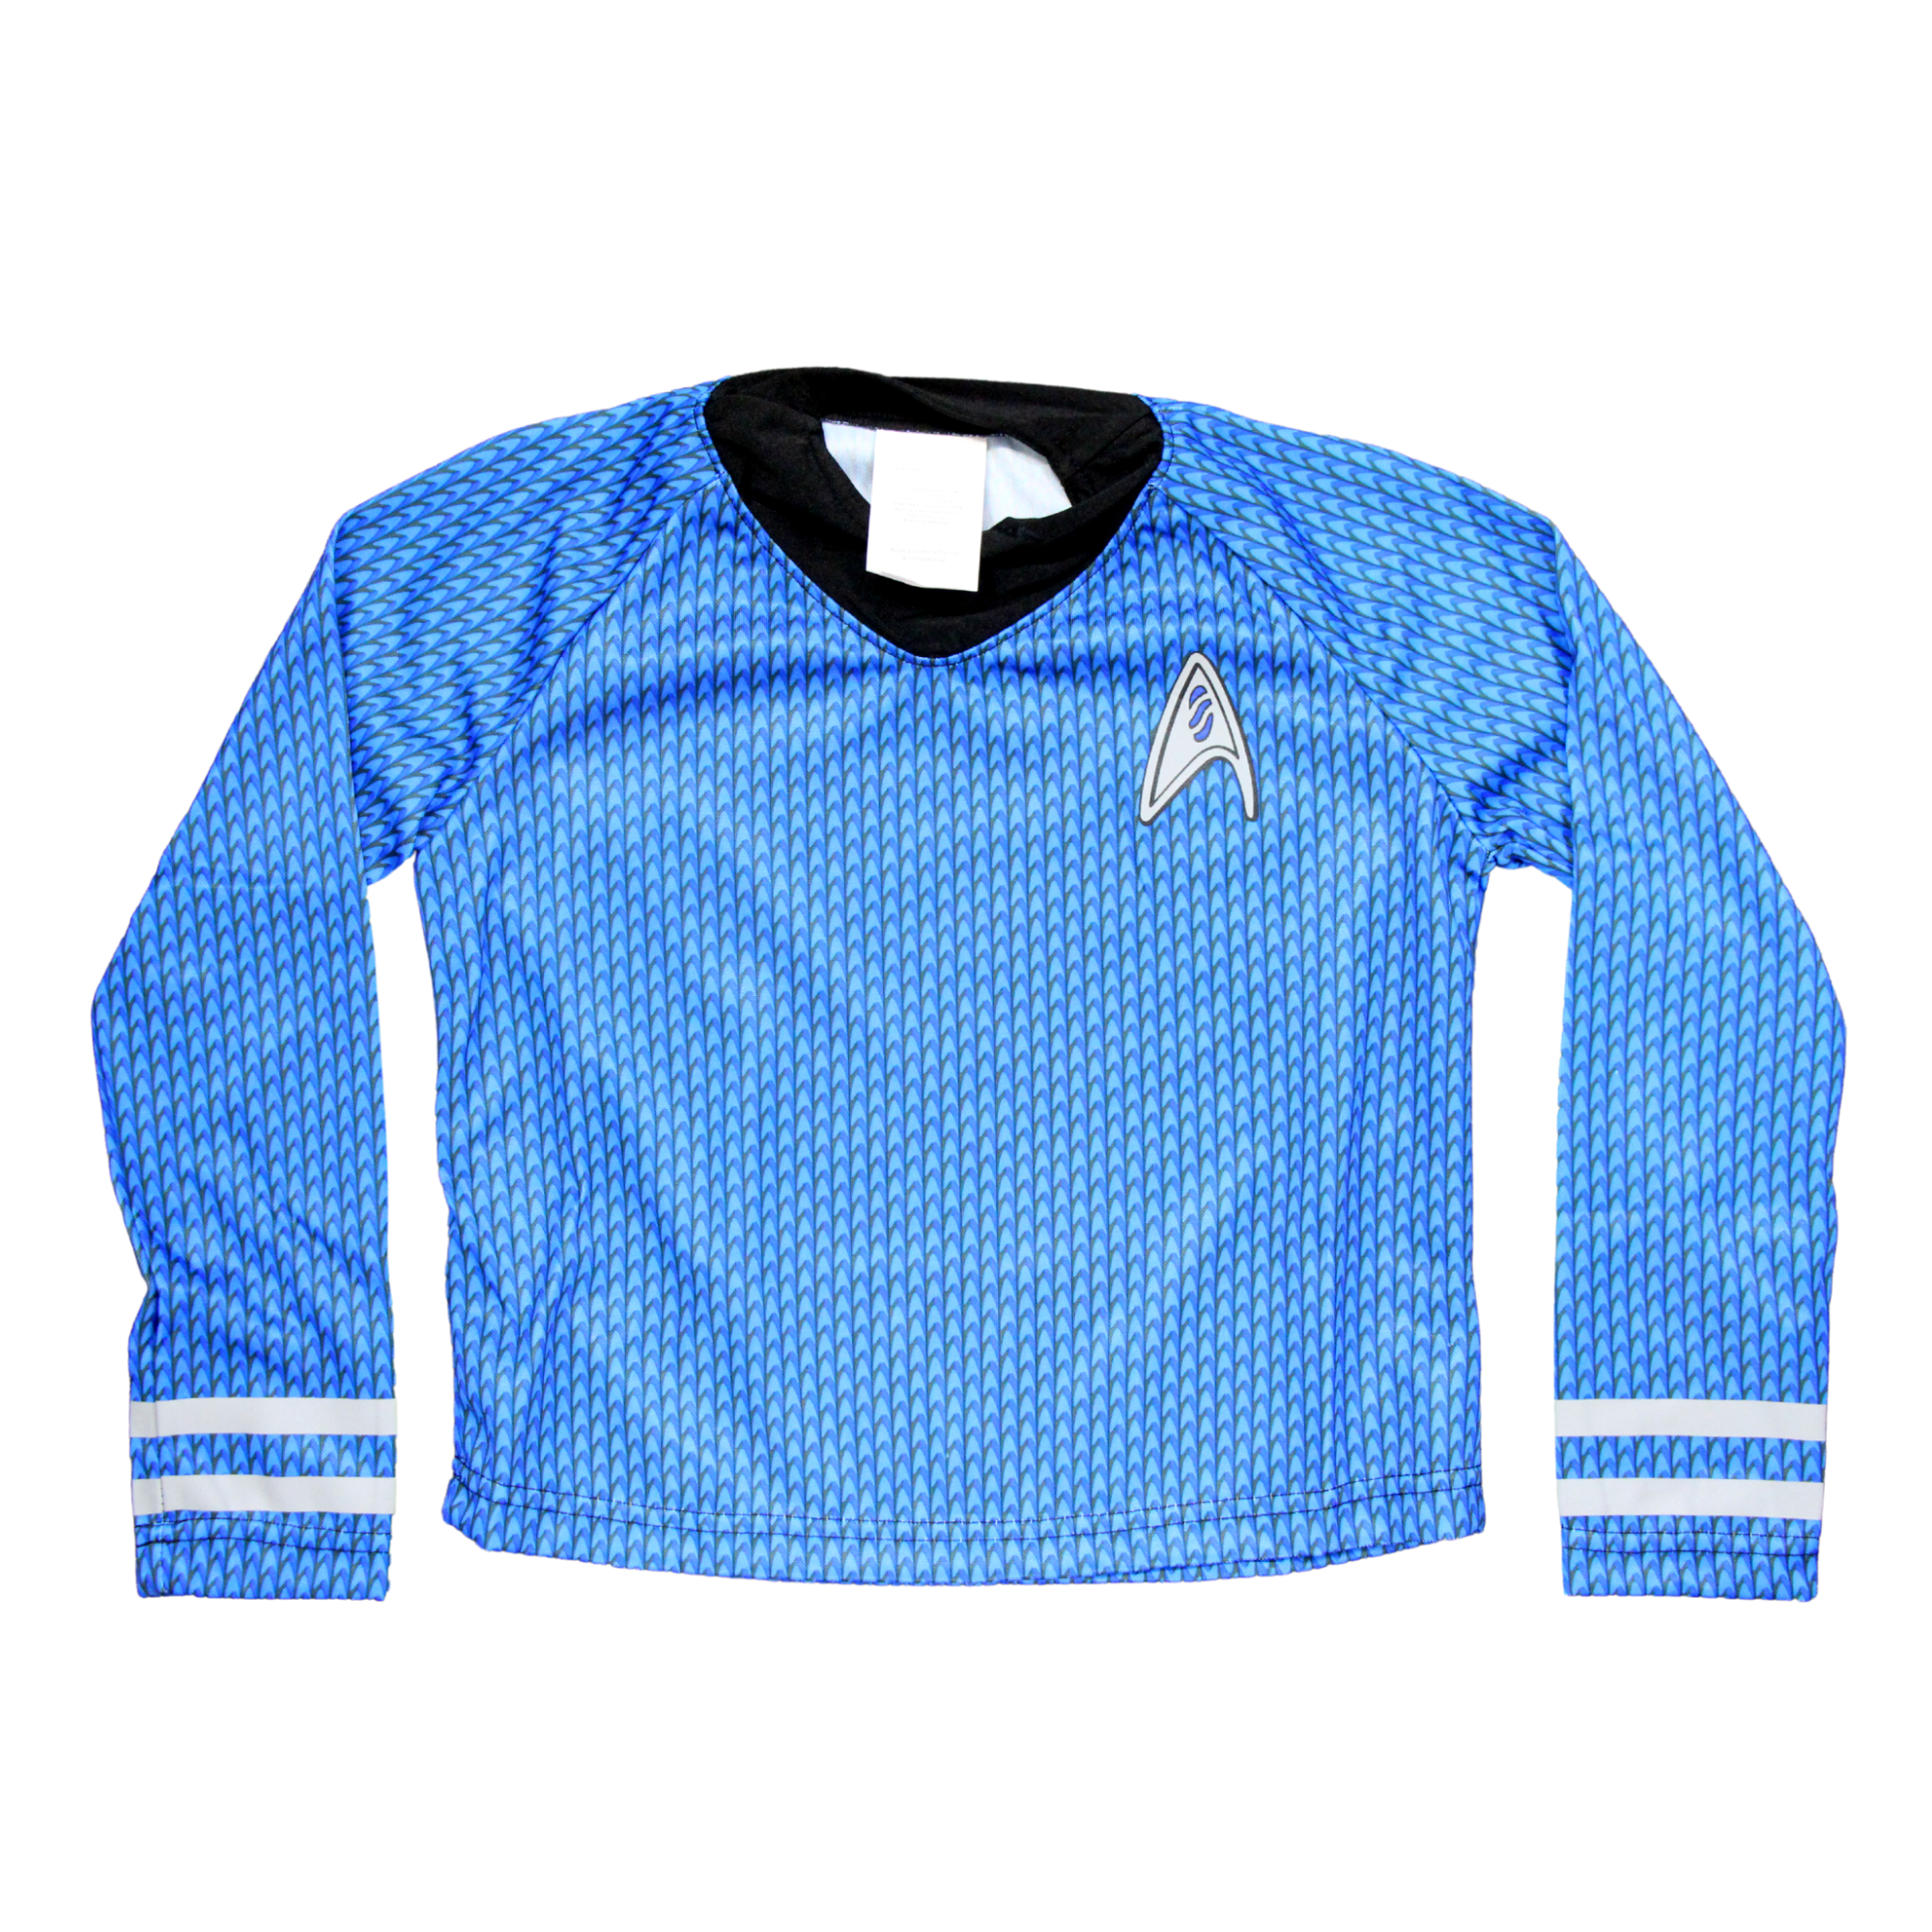 Rubie's Star Trek Spock Children's Fancy Dress Costume - Small - Toptoys2u